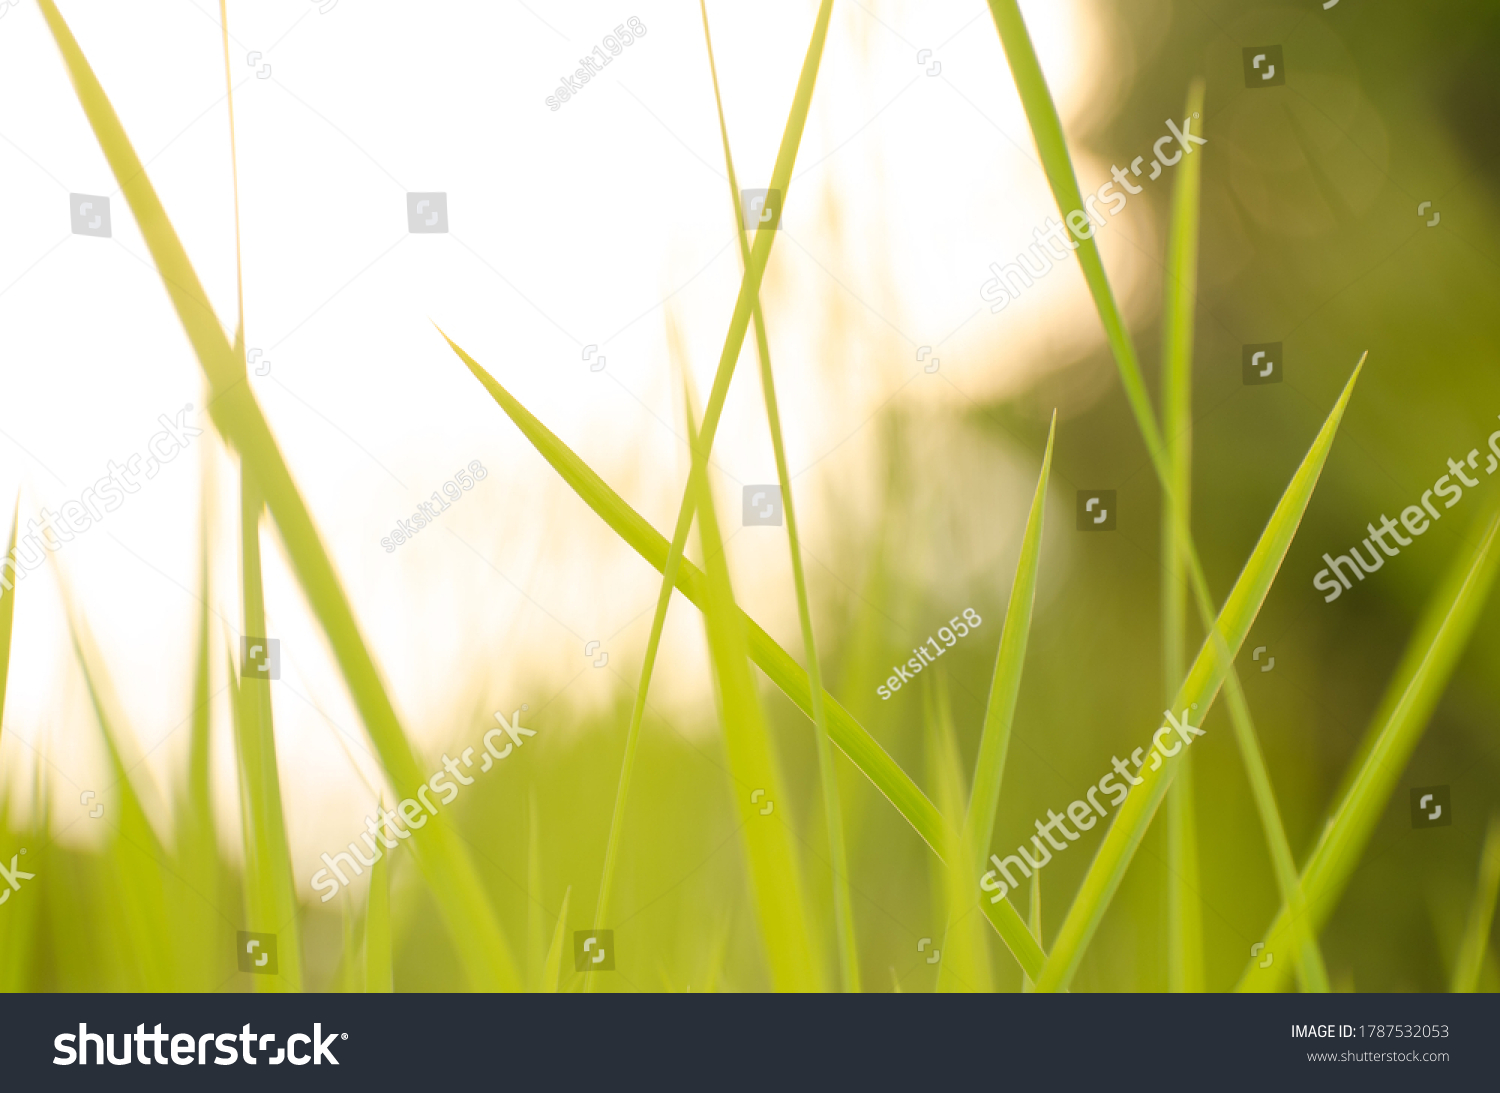 11,616 Grass zoom Images, Stock Photos & Vectors | Shutterstock